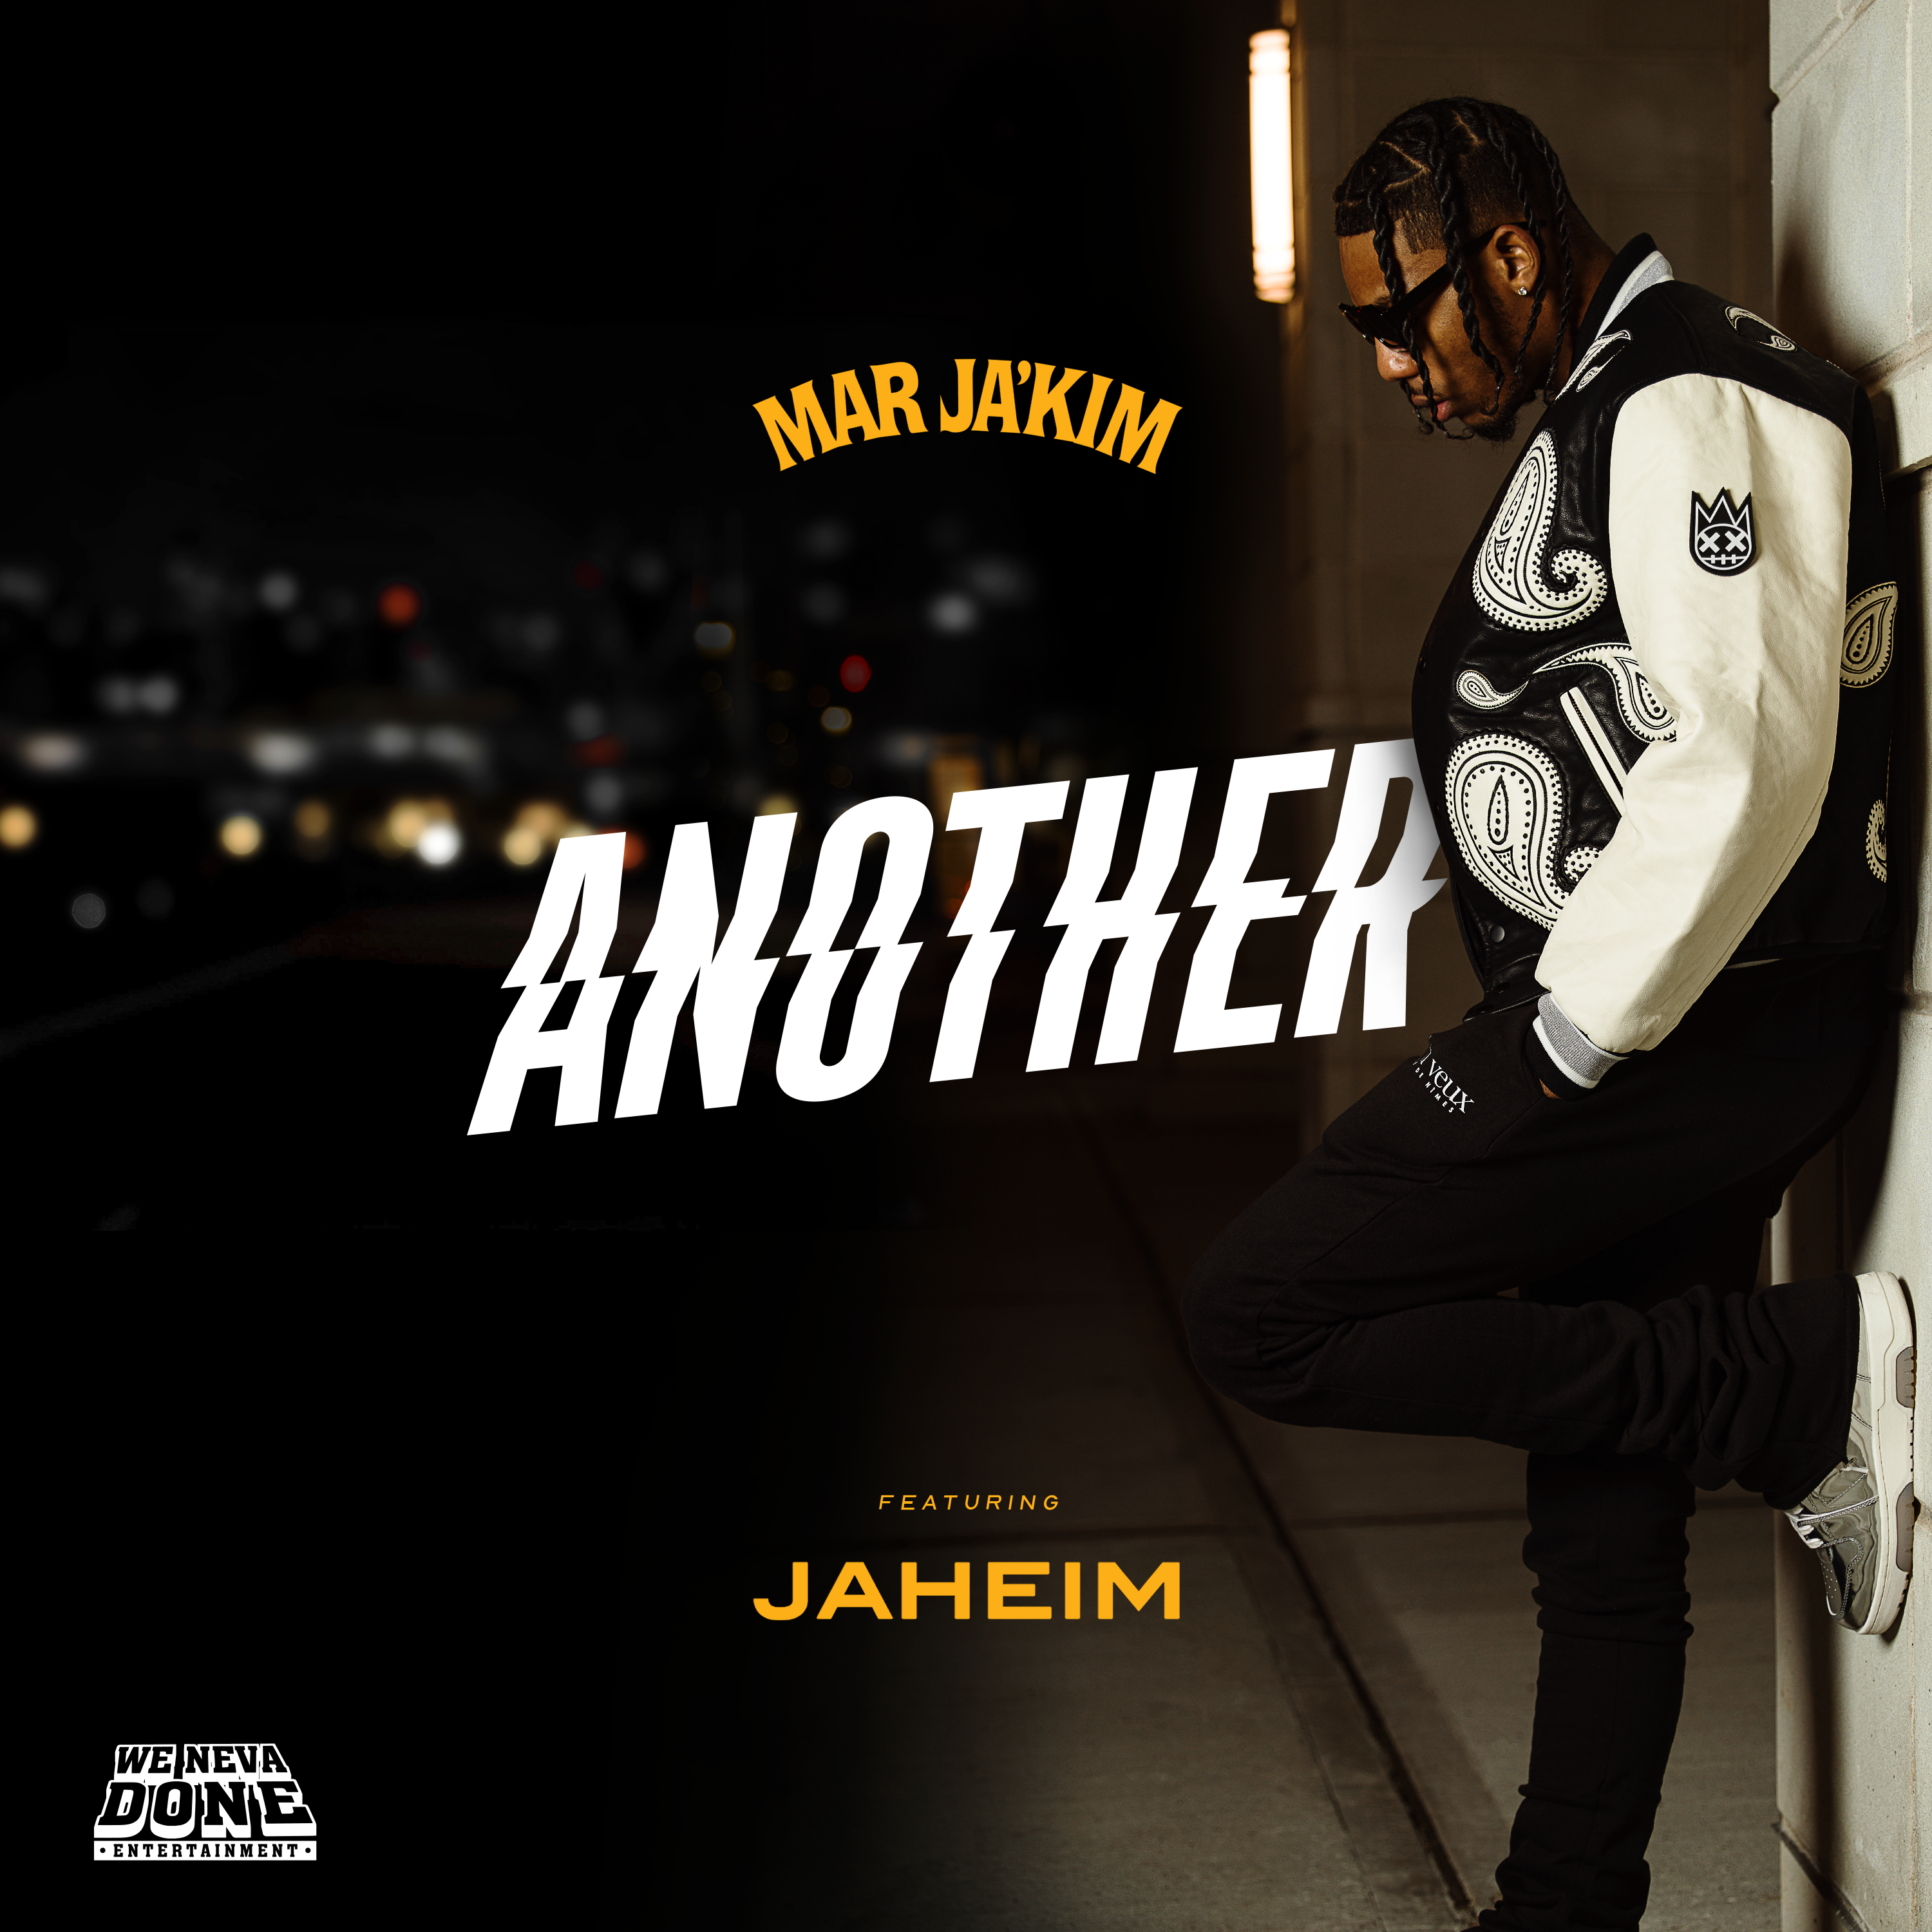 Marja’kim ft Jaheim – “Another”